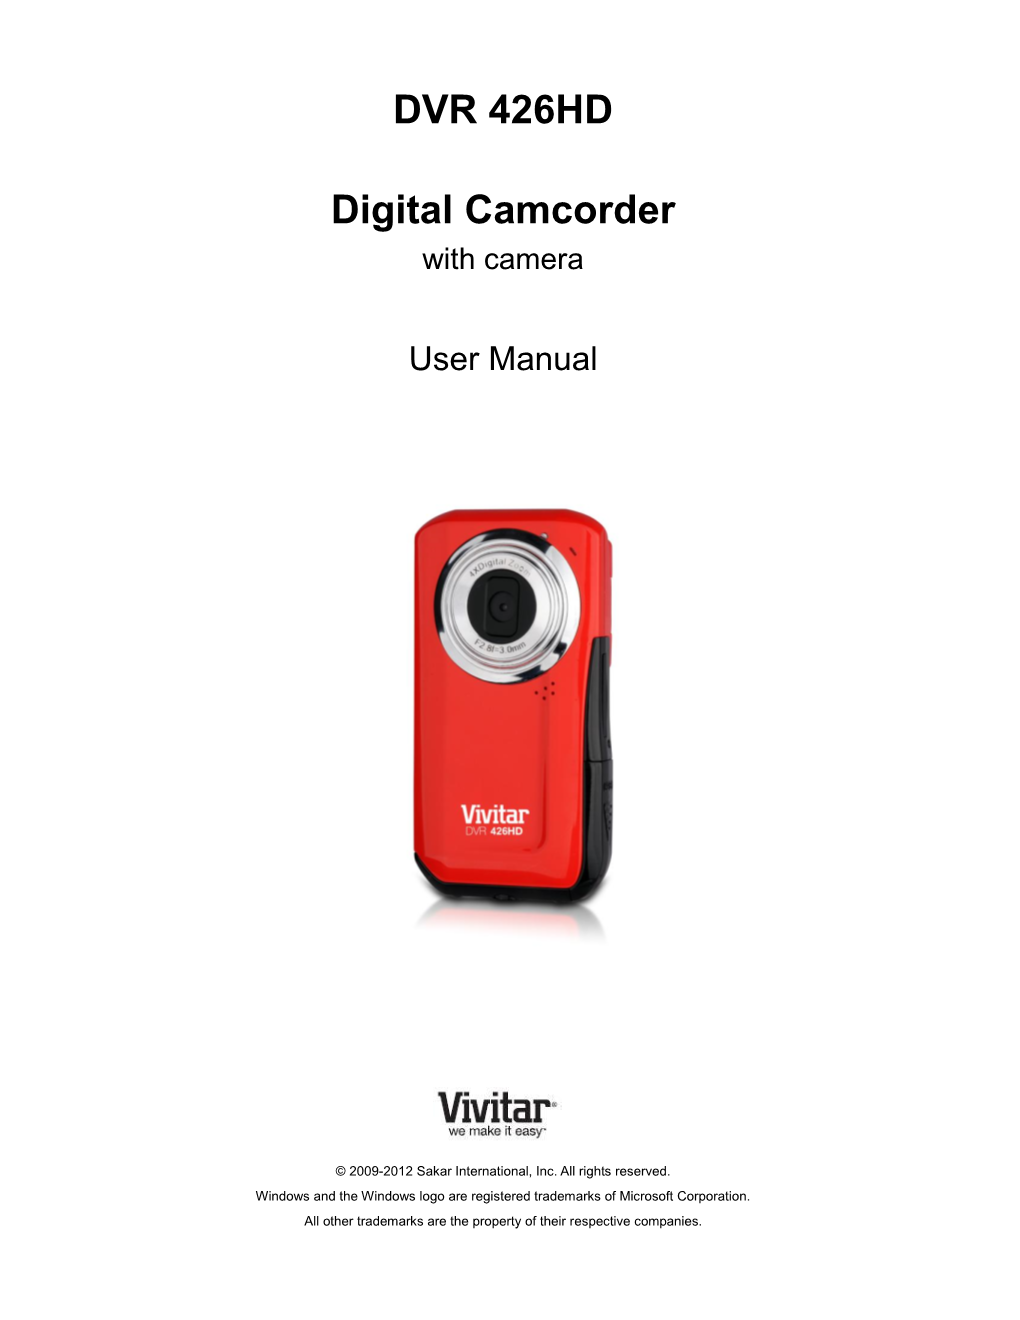 DVR 426HD Digital Camcorder